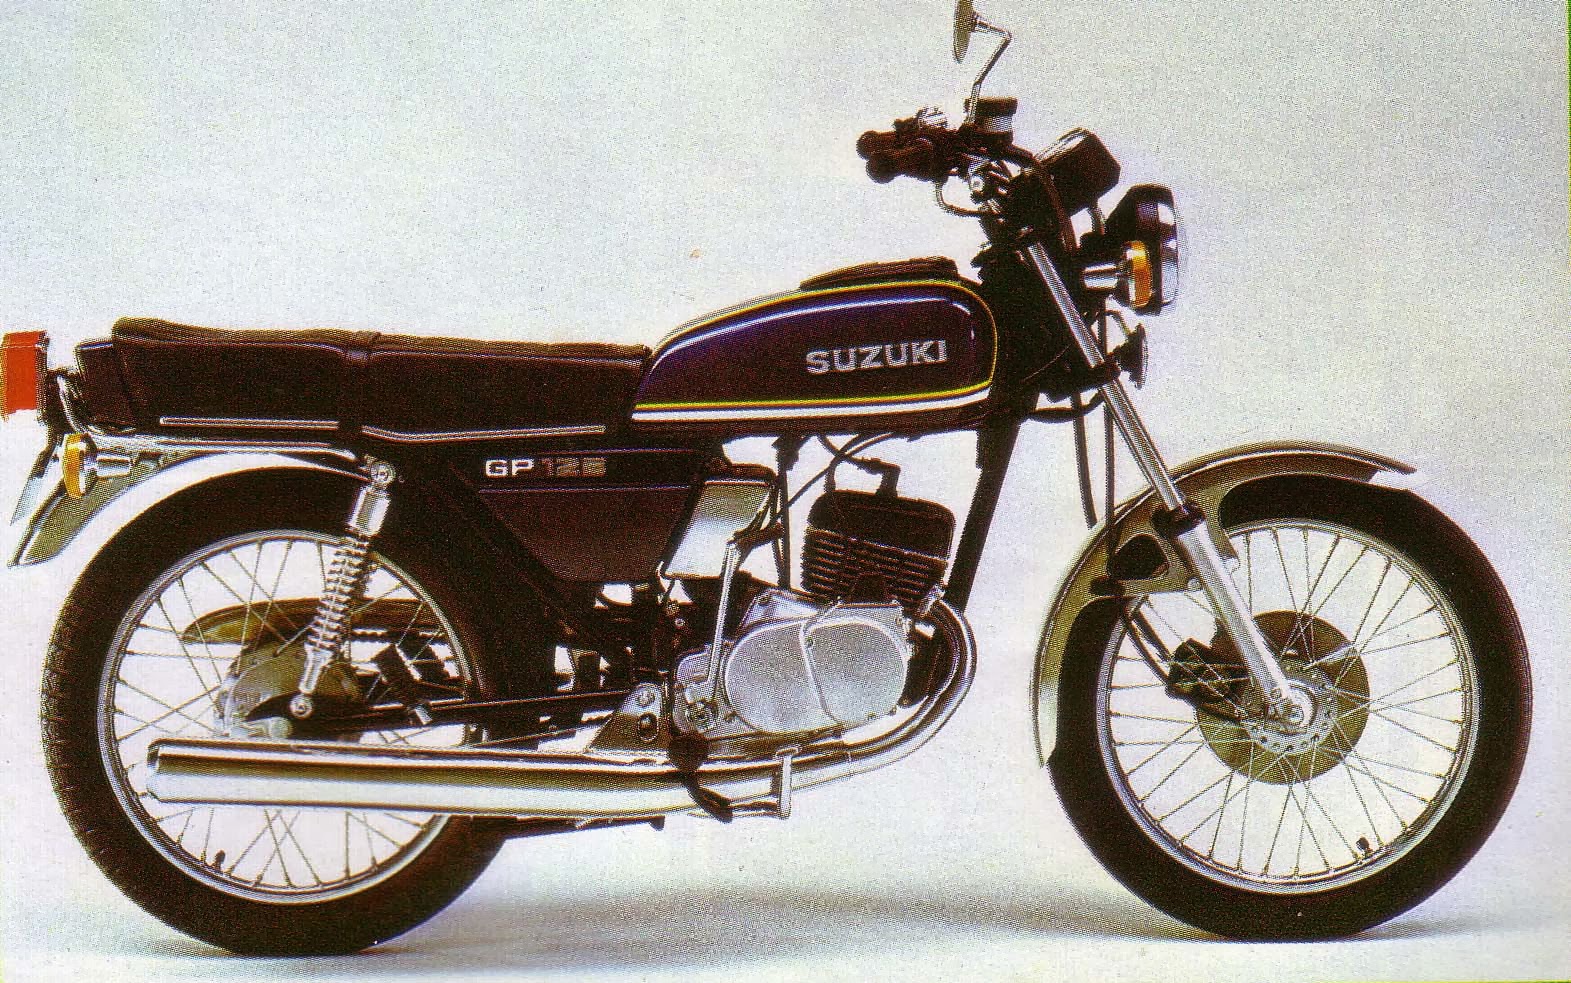 Spesifikasi Suzuki GP 125